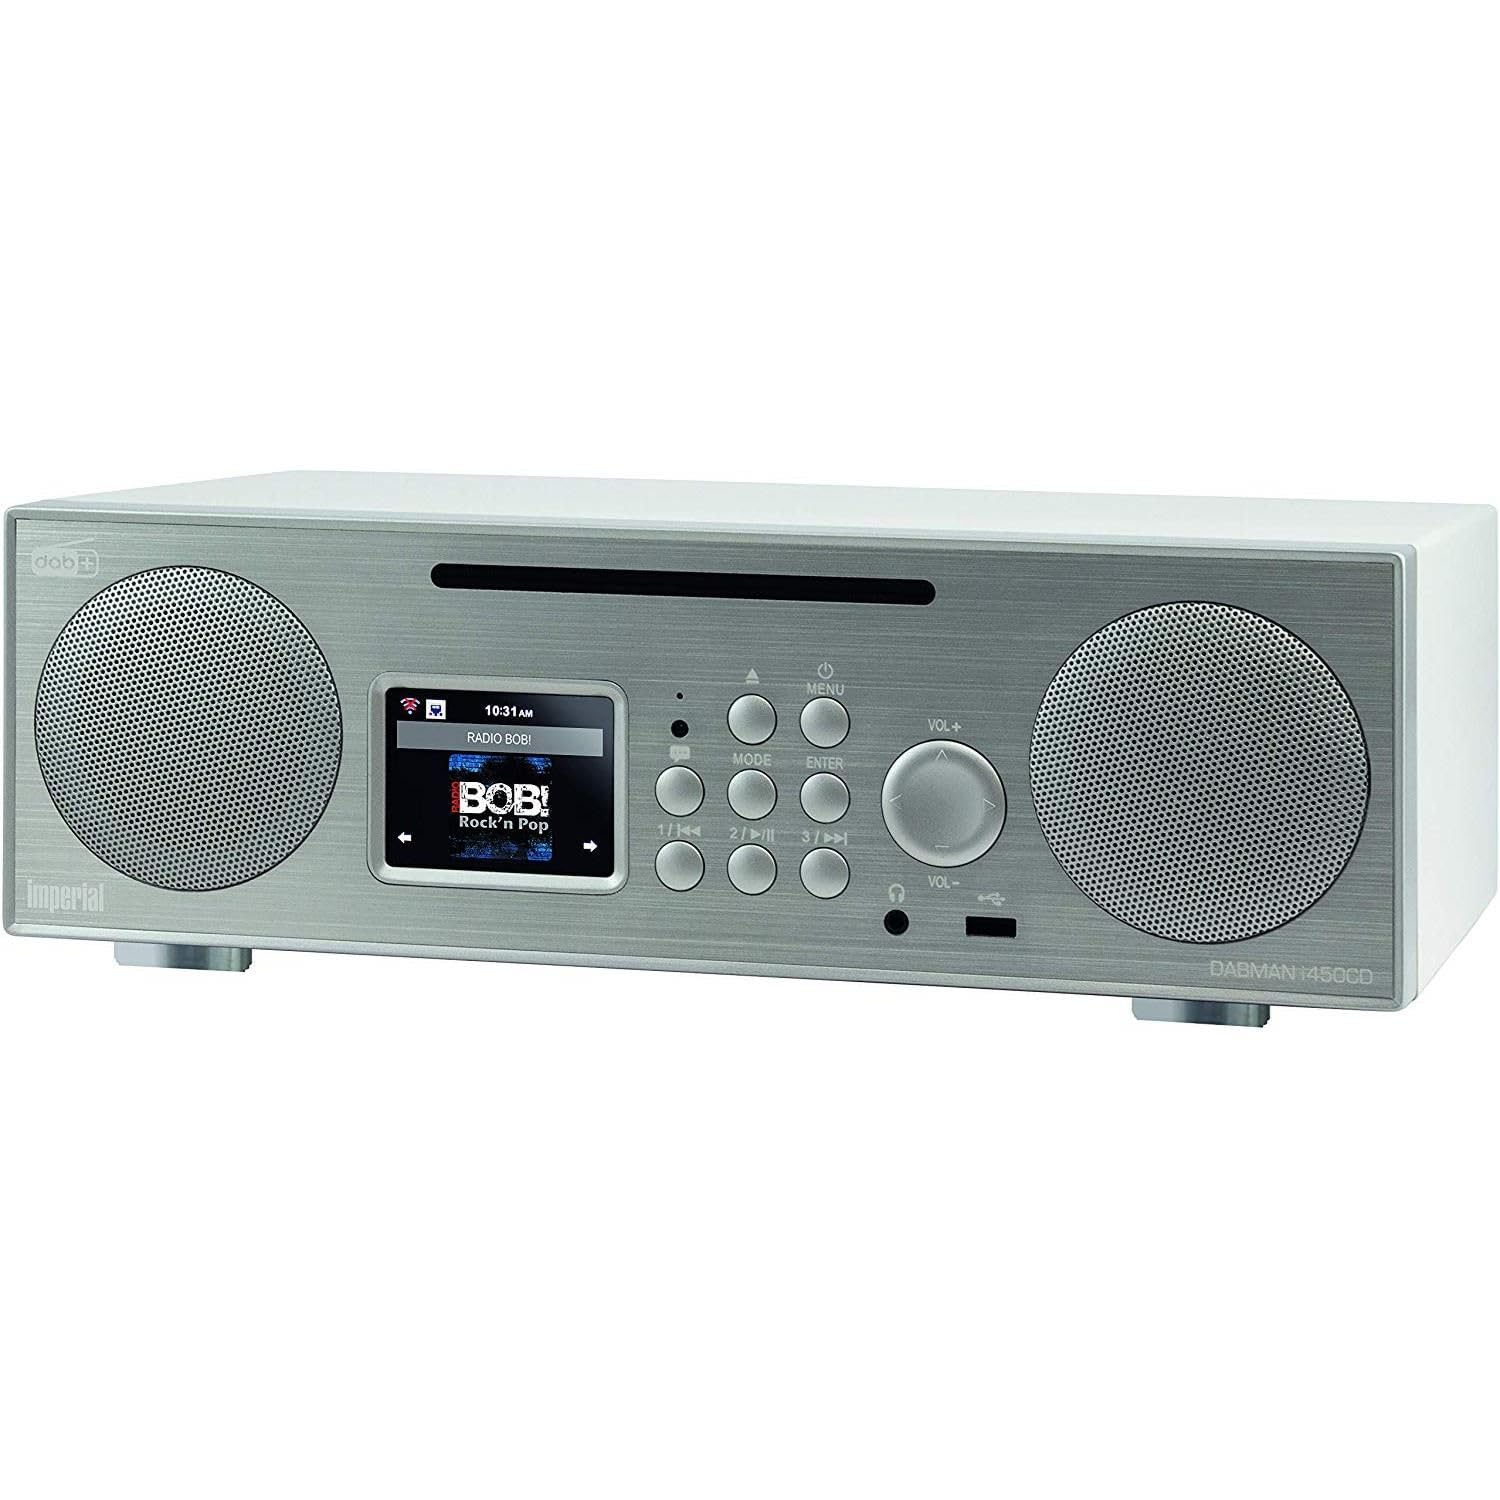 IMPERIAL DABMAN i450 CD Internetradio/DAB+ Digitalradio mit CD Player (DAB+ Radio, Internet/DAB+ / DAB/UKW/FM, CD-Player, Bluetooth, WLAN, LAN, USB, Aux In, Subwoofer, 2.1 Sound) Silber-Weiß